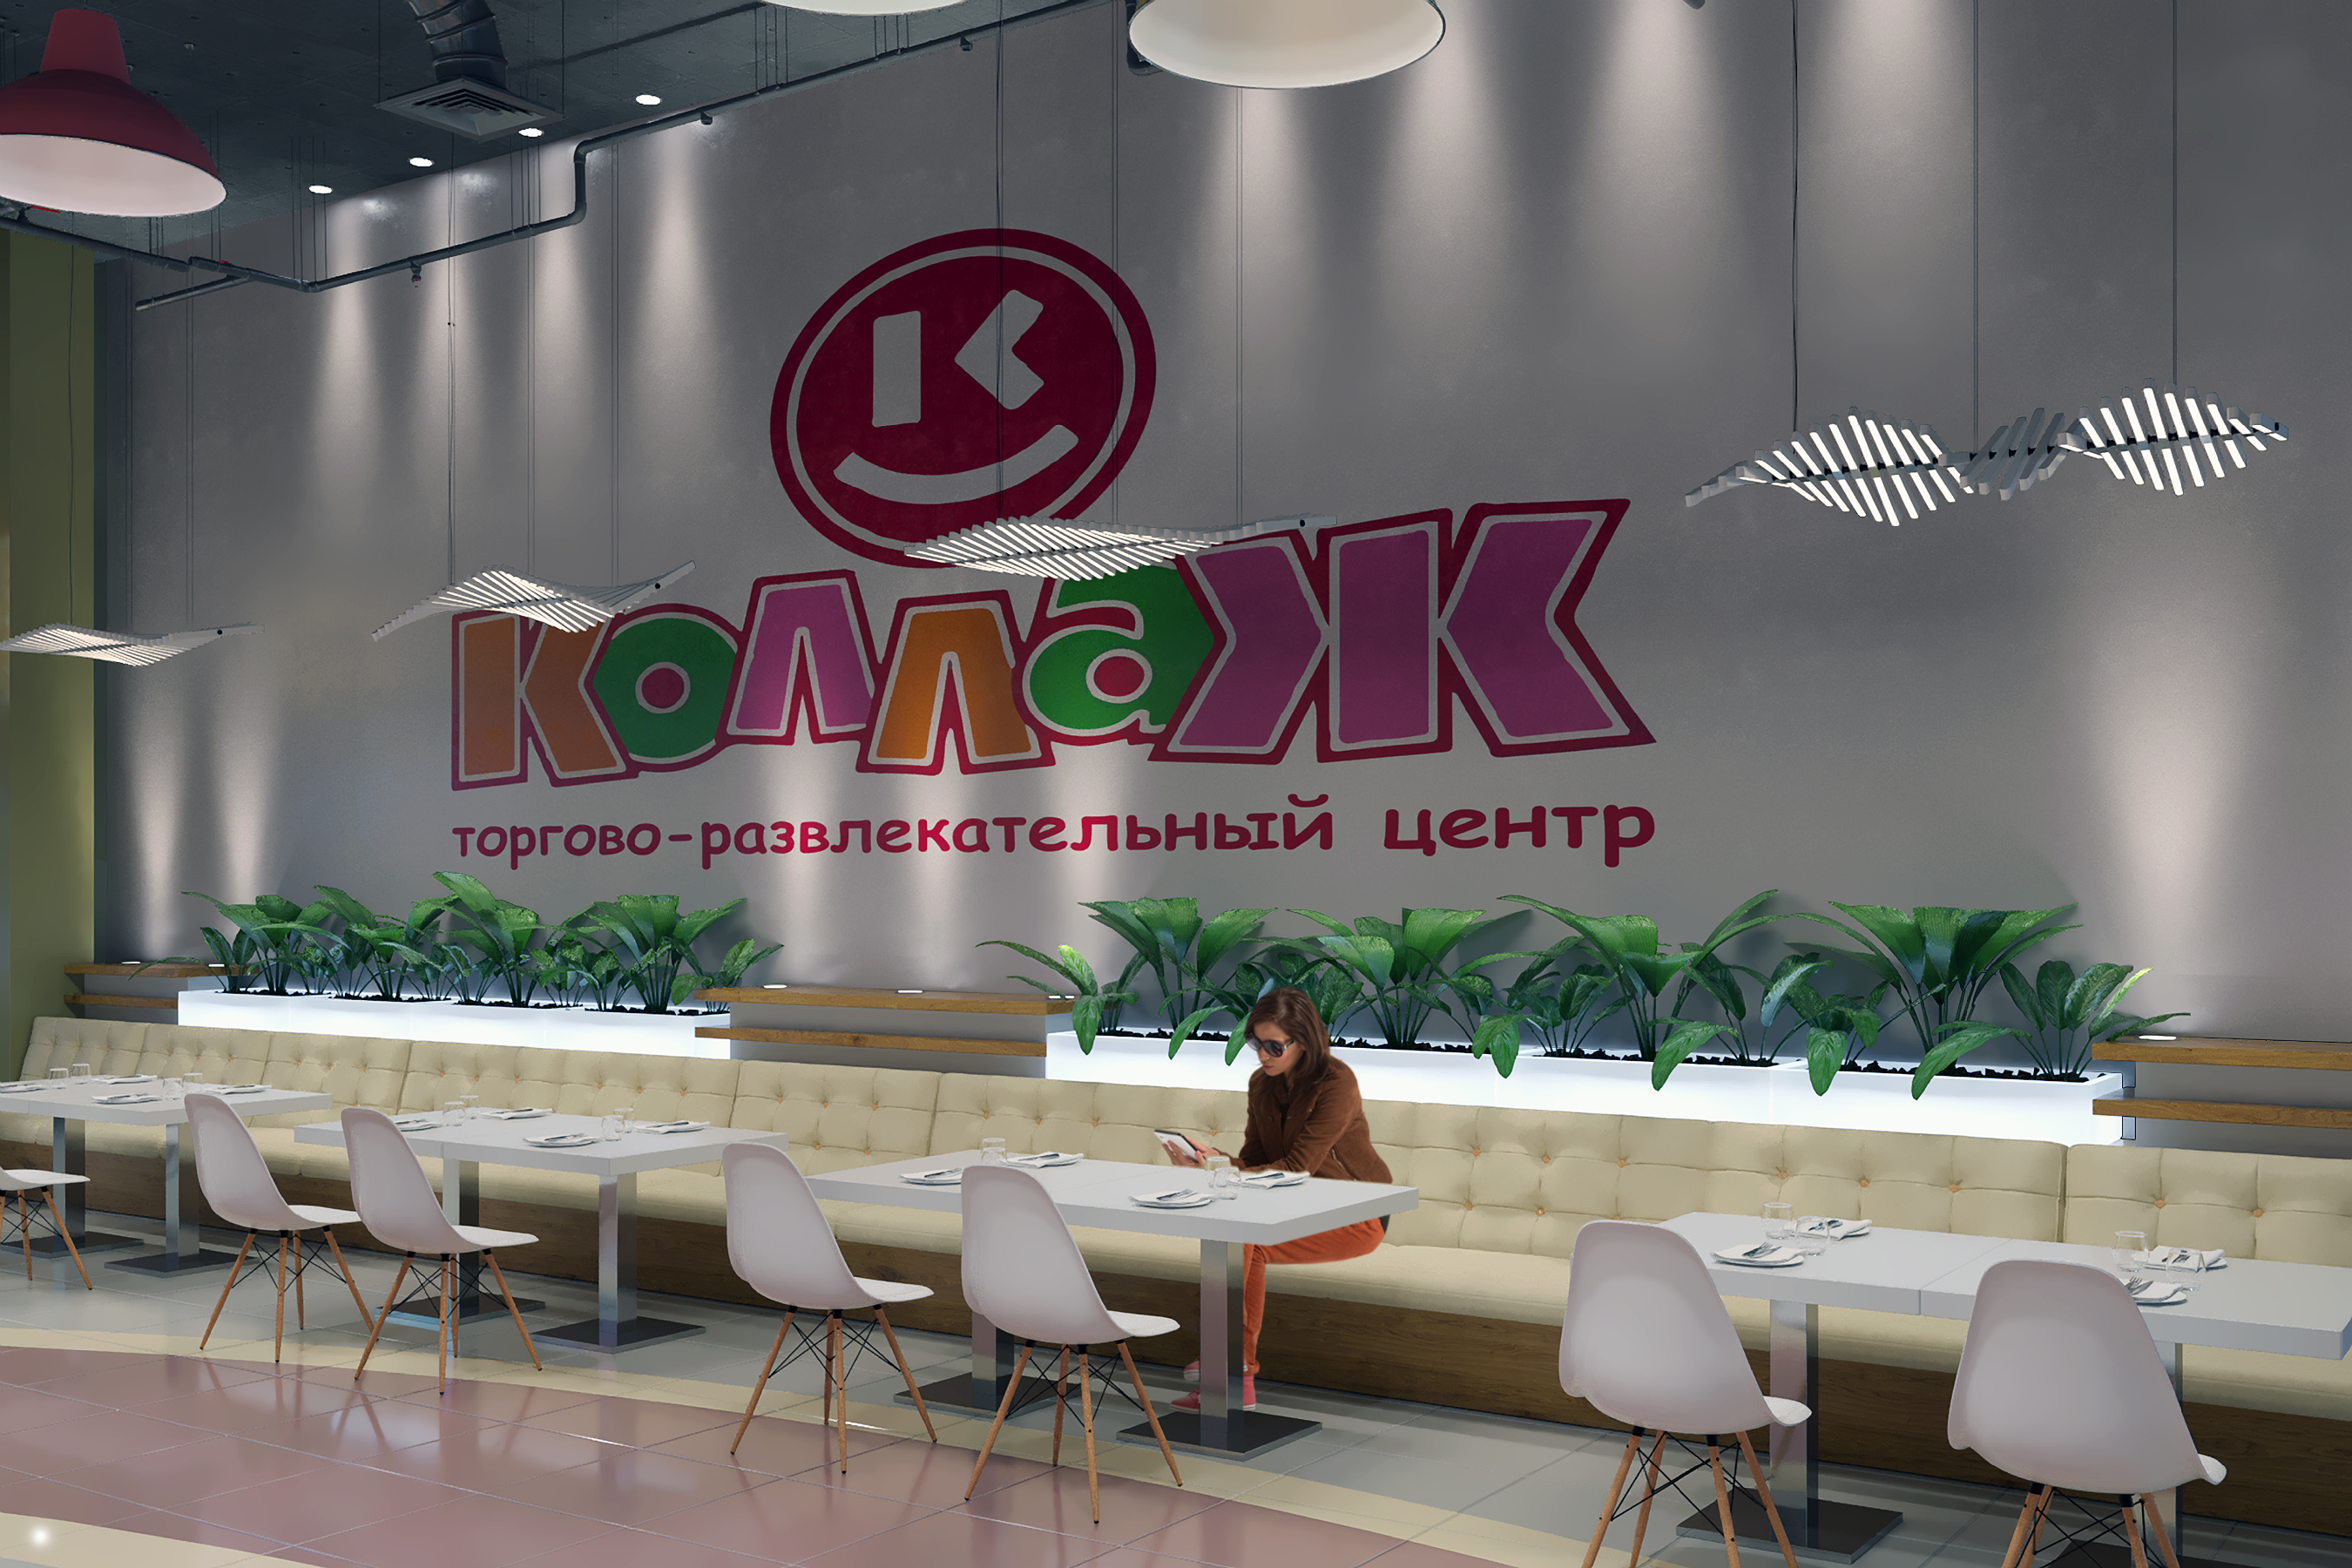 imagen de Foodcourt en el centro comercial "Kollaz" en 3d max corona render